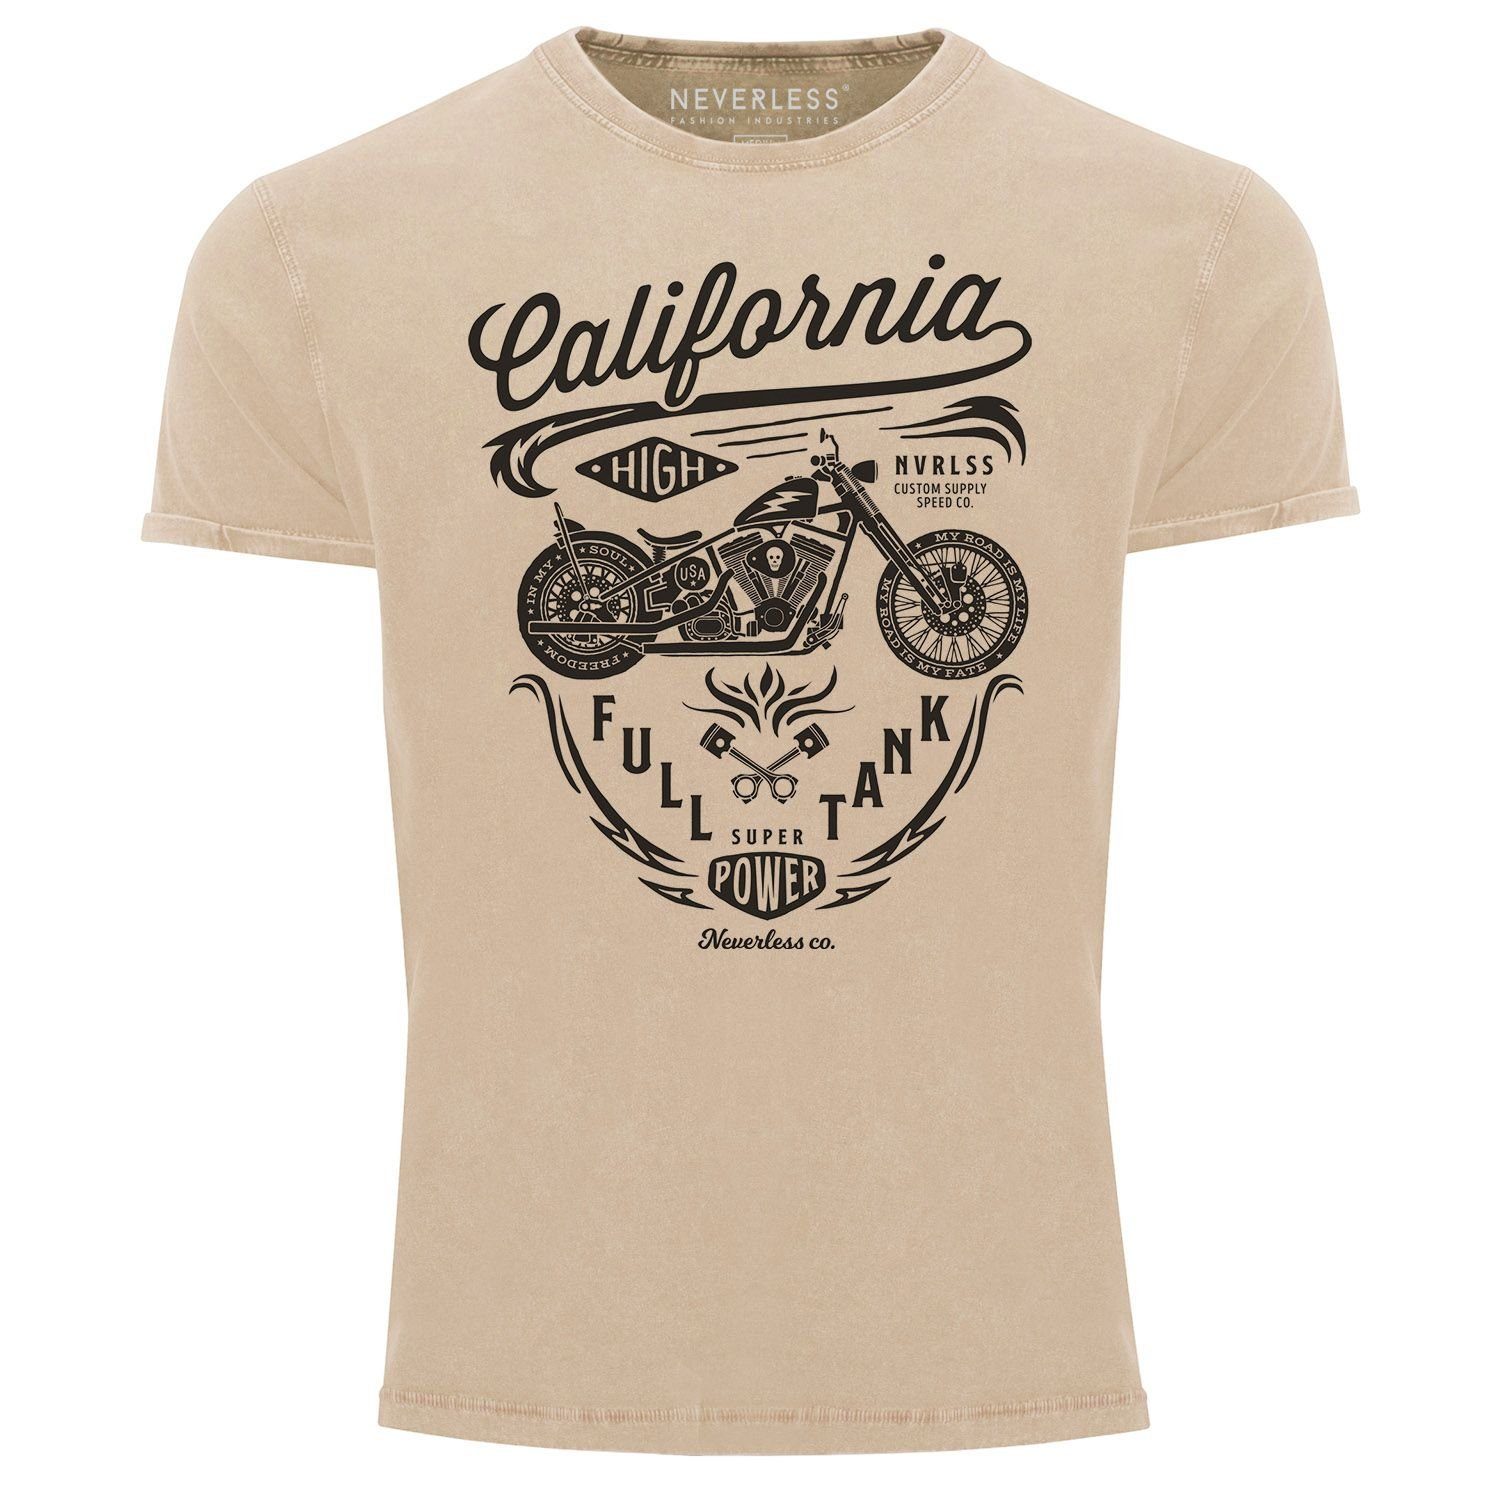 Neverless Print-Shirt Herren Vintage Shirt Biker Motorrad Schriftzug California Full Tank Used Look Slim Fit Neverless® mit Print natur